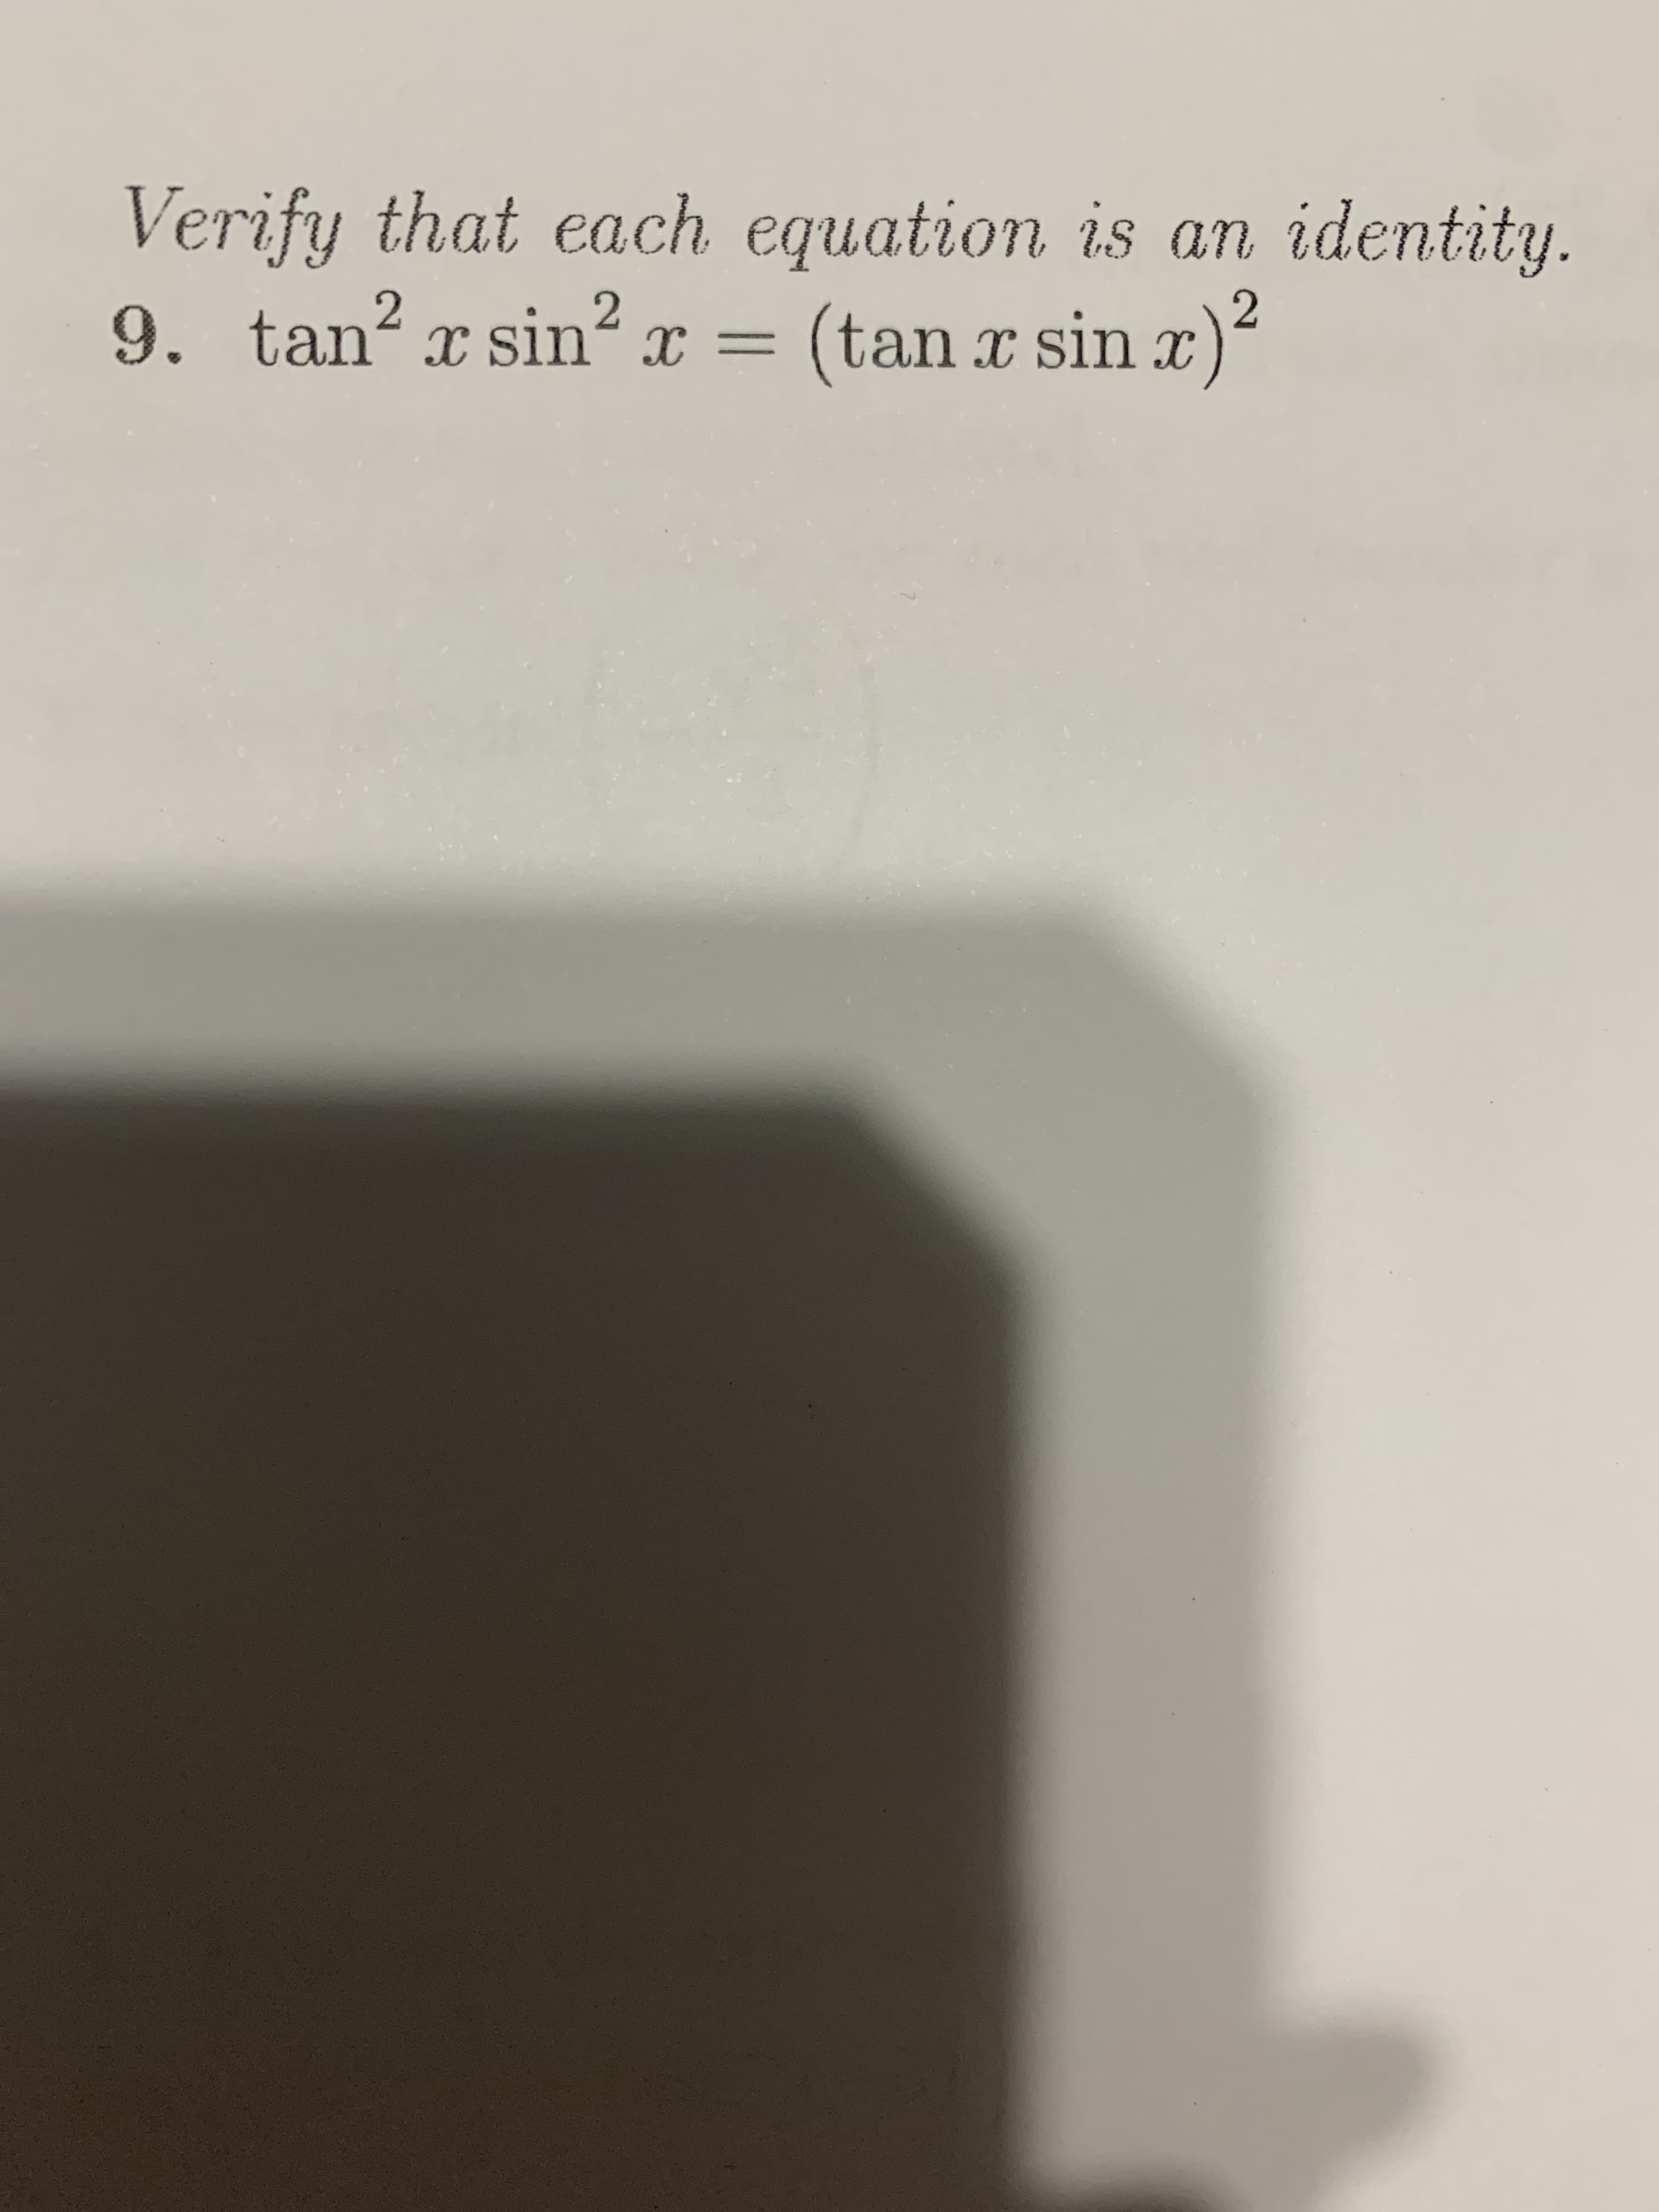 Verify that each equation is an identity.
9. tan2 sin2
2
(tan x sin a
х —
